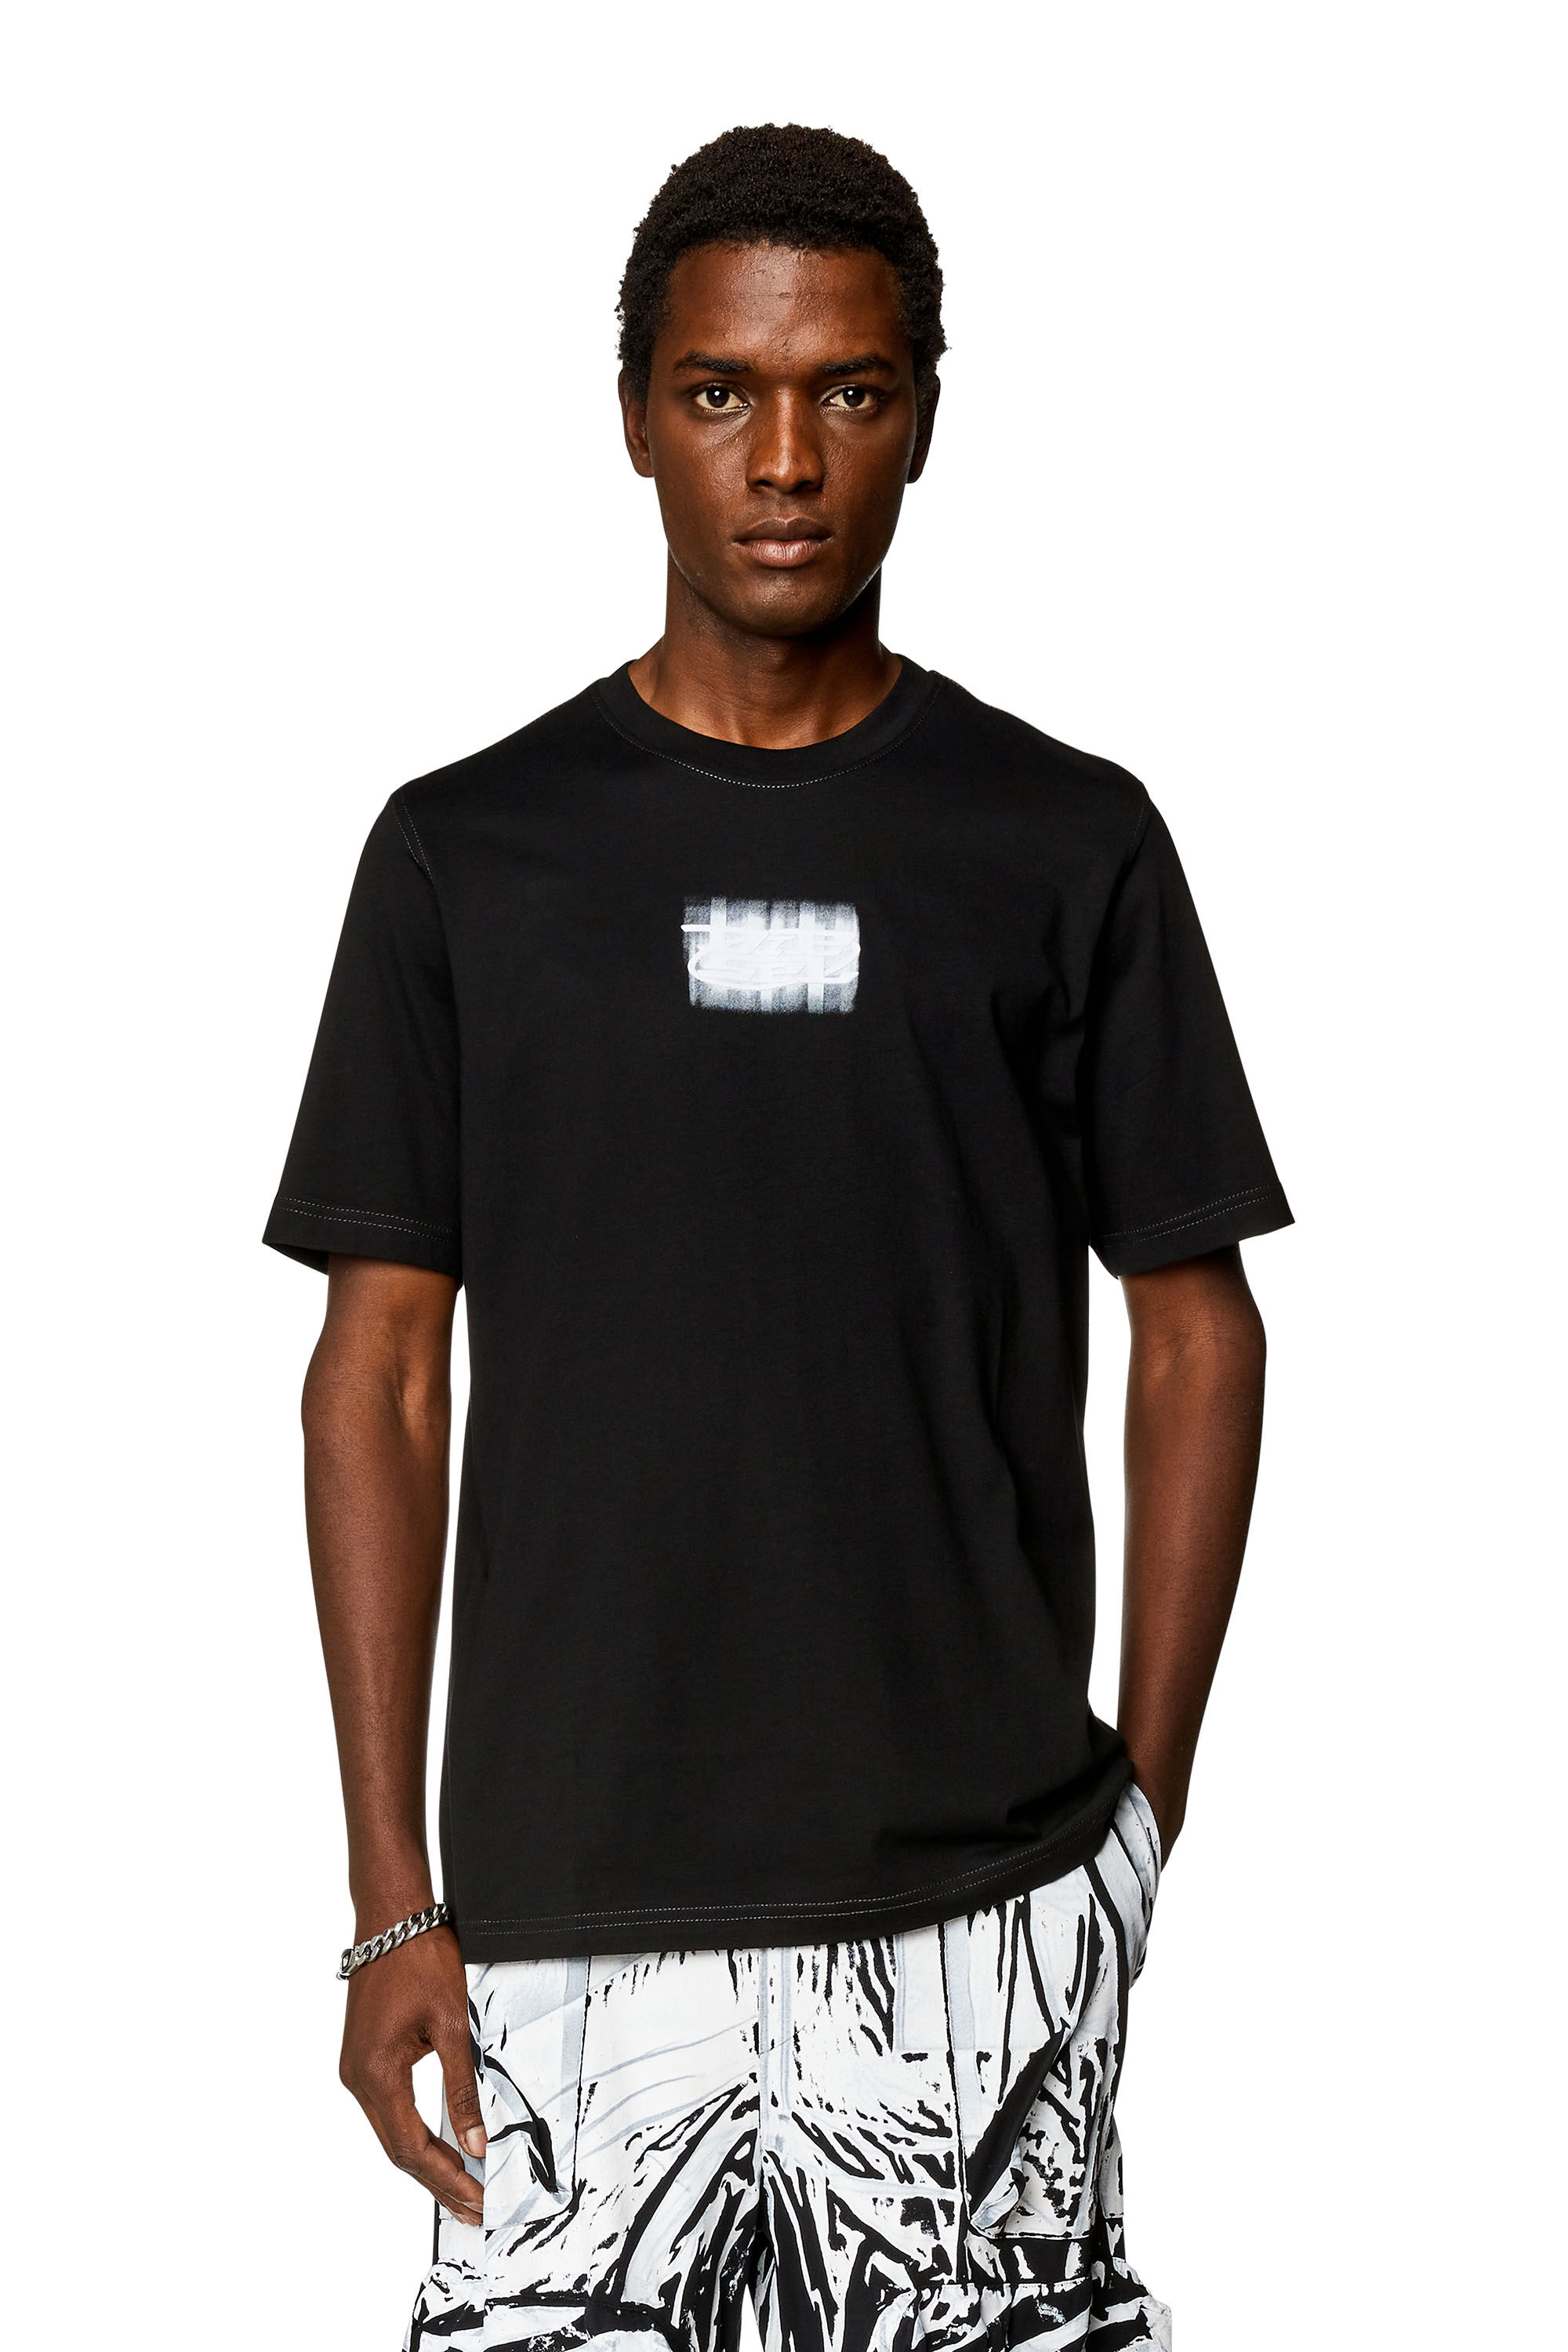 Diesel - T-JUST-N4, Man Logo-flocked T-shirt in organic cotton in Black - Image 3